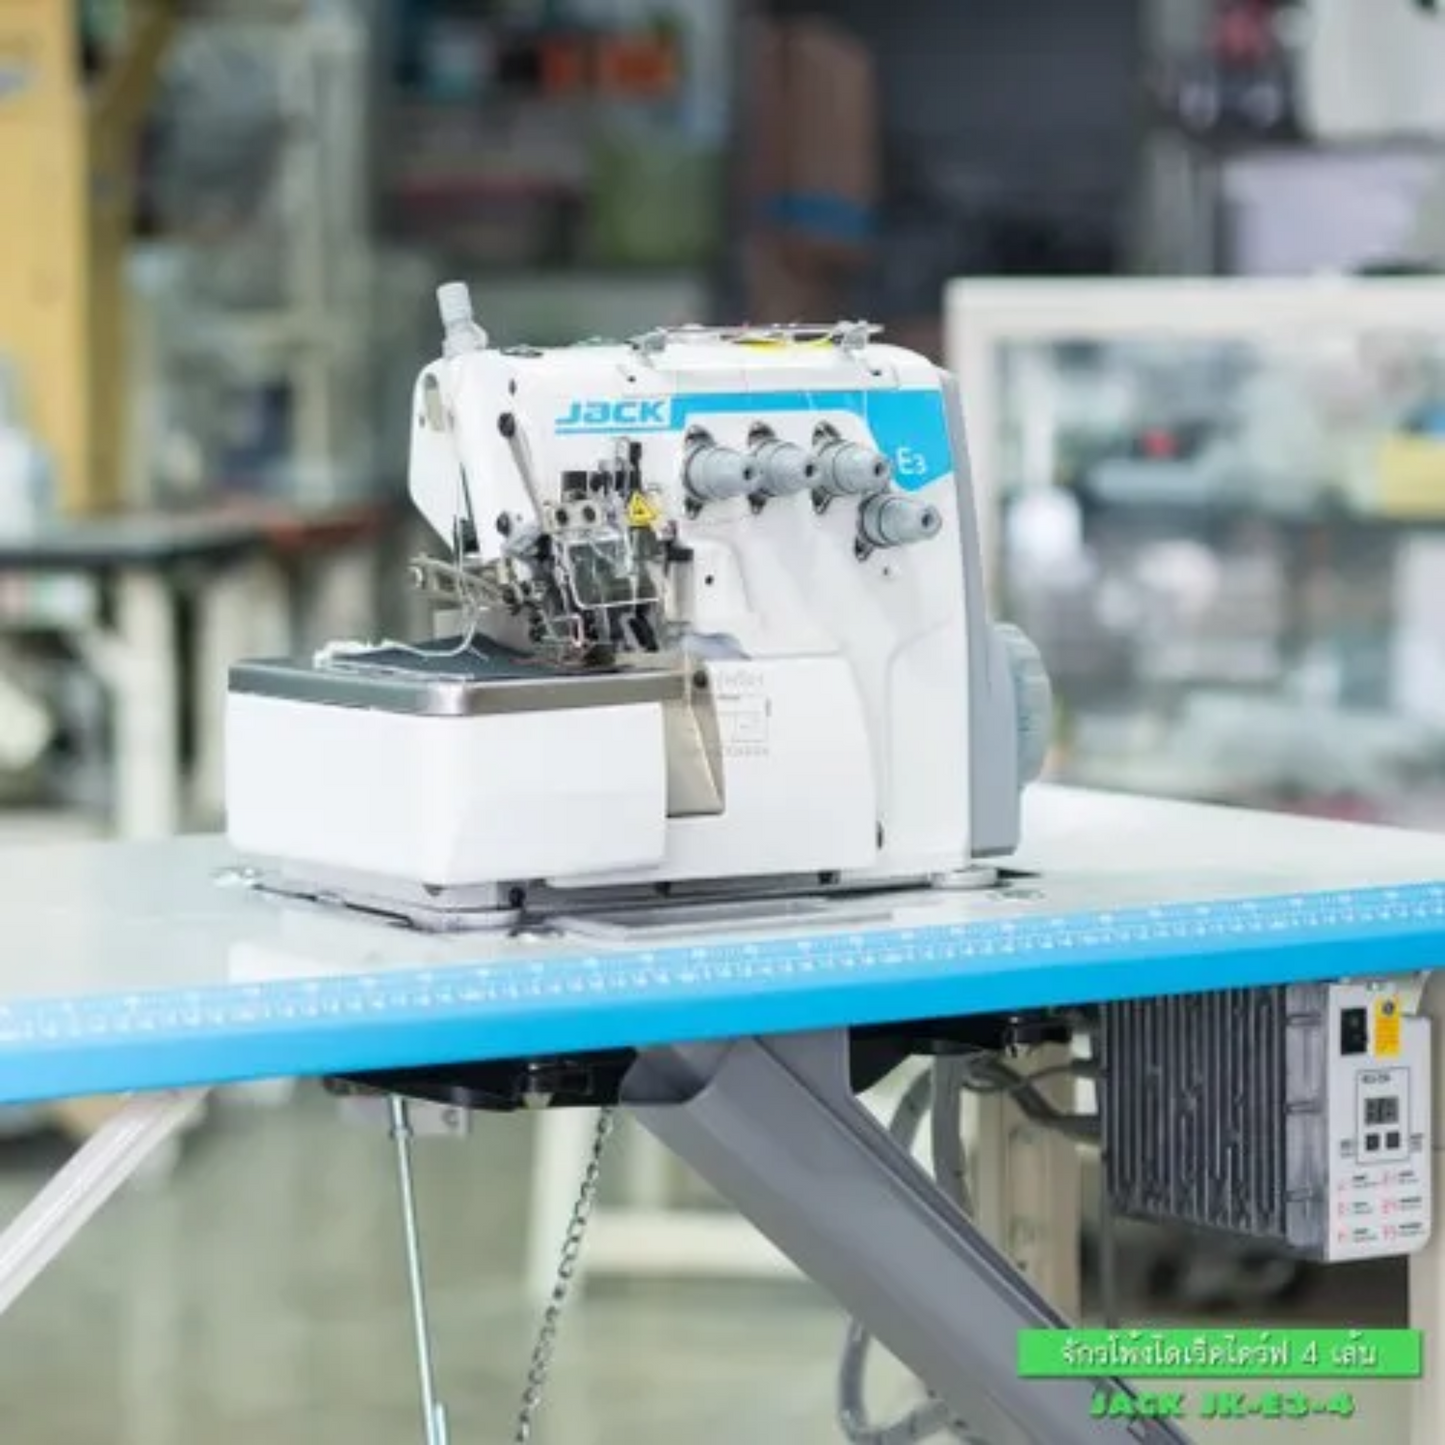 Jack E3 Model 5-thread  - Overlock sewing machine - Multi color - Side view